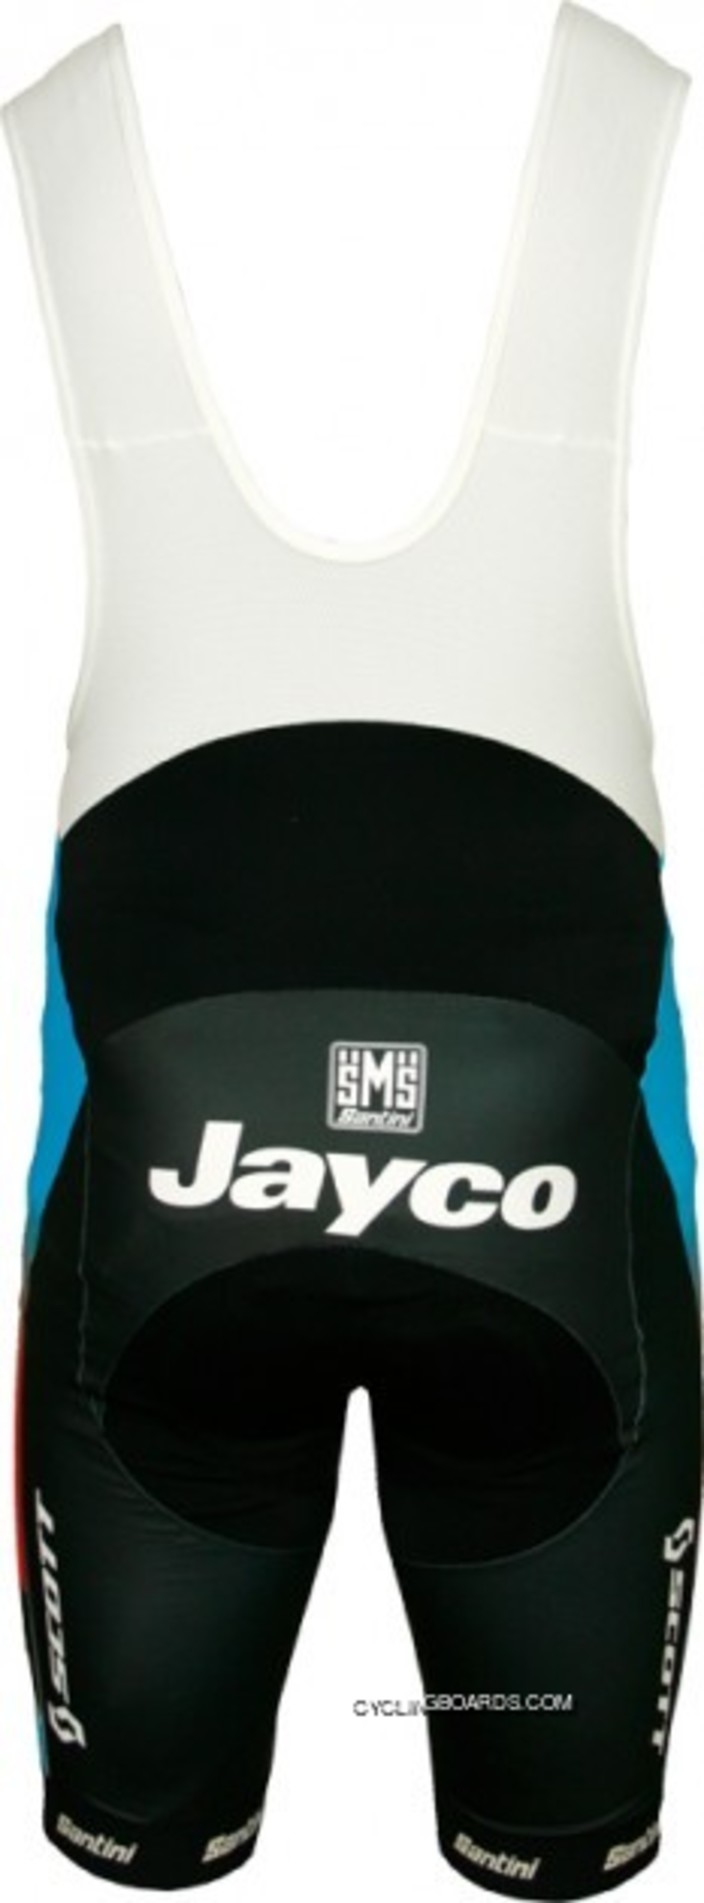 Jayco Ais 2012 Radsport-Profi-Team - Bib Shorts Tj-336-5699 New Style